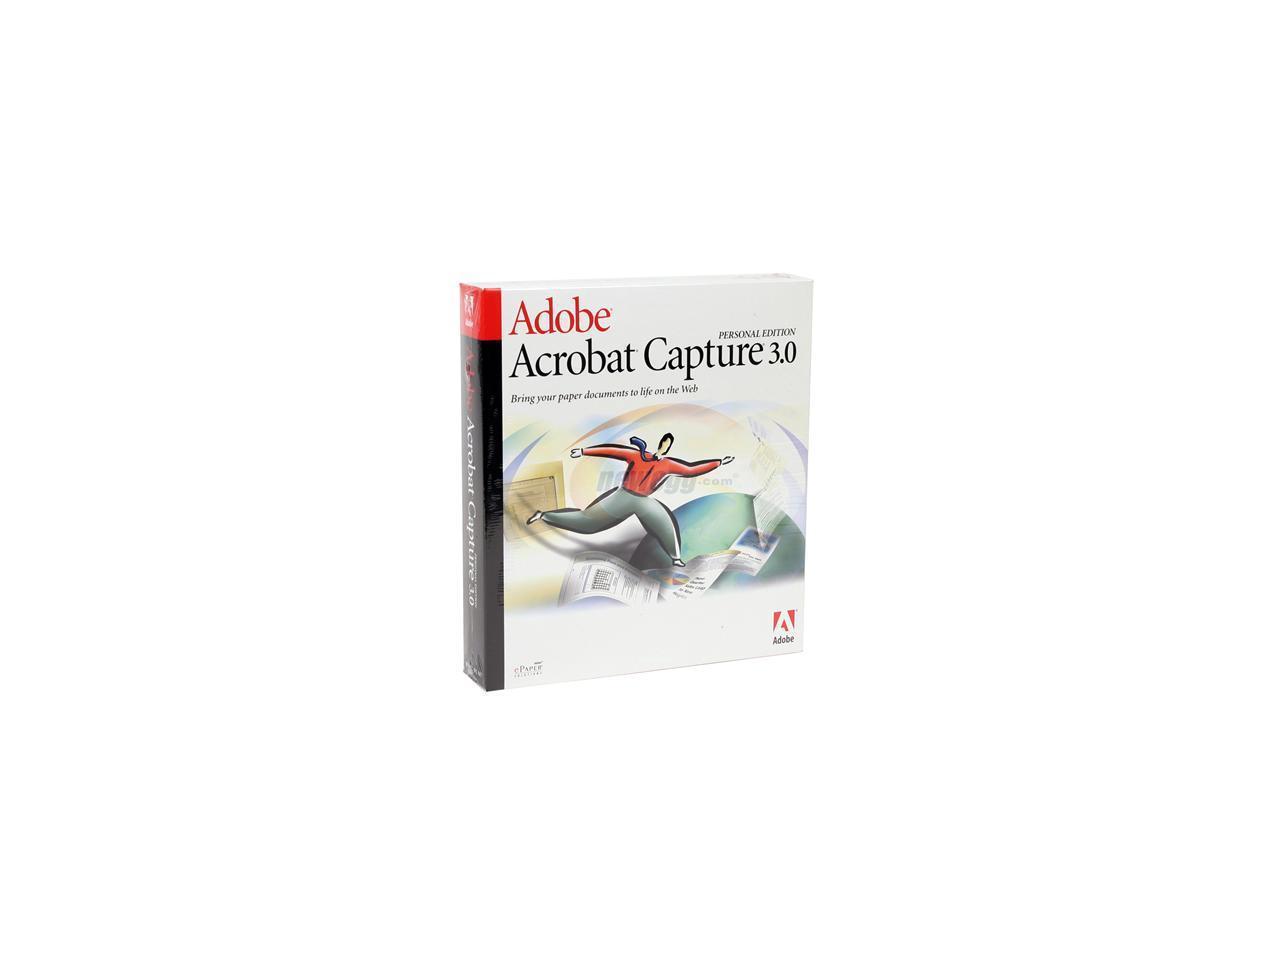 adobe acrobat capture 3.0 free download